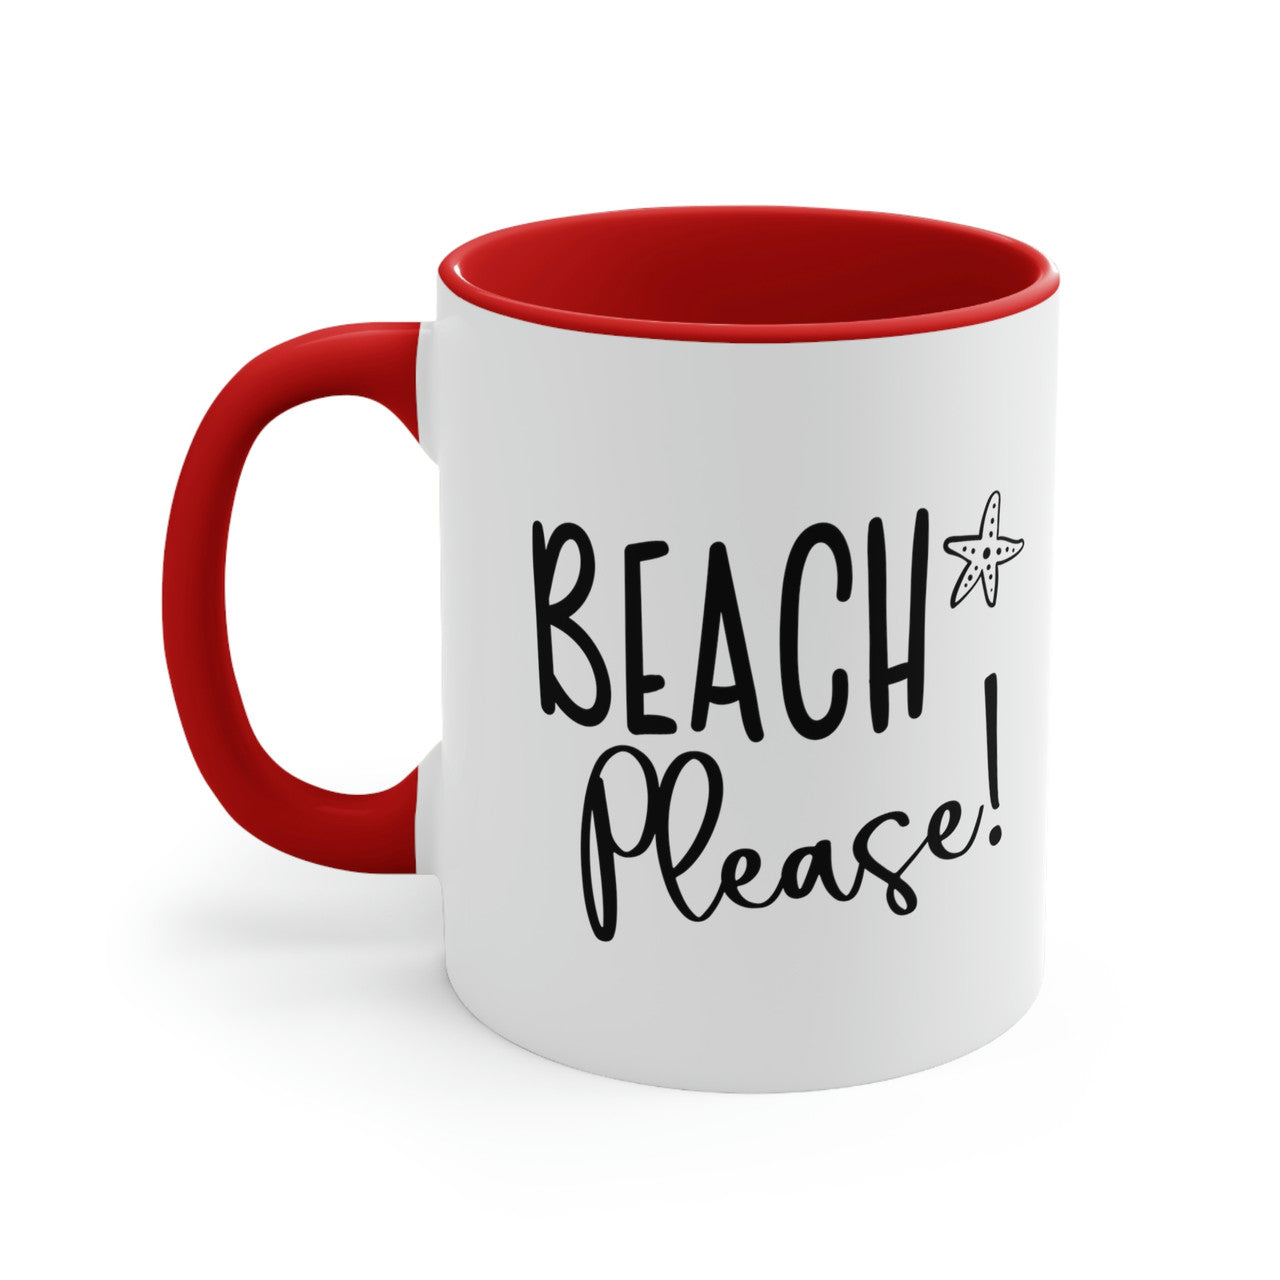 BEACH Please! Ceramic Beach Coffee Mug, 5 Colors Mugs New England Trading Co Red  